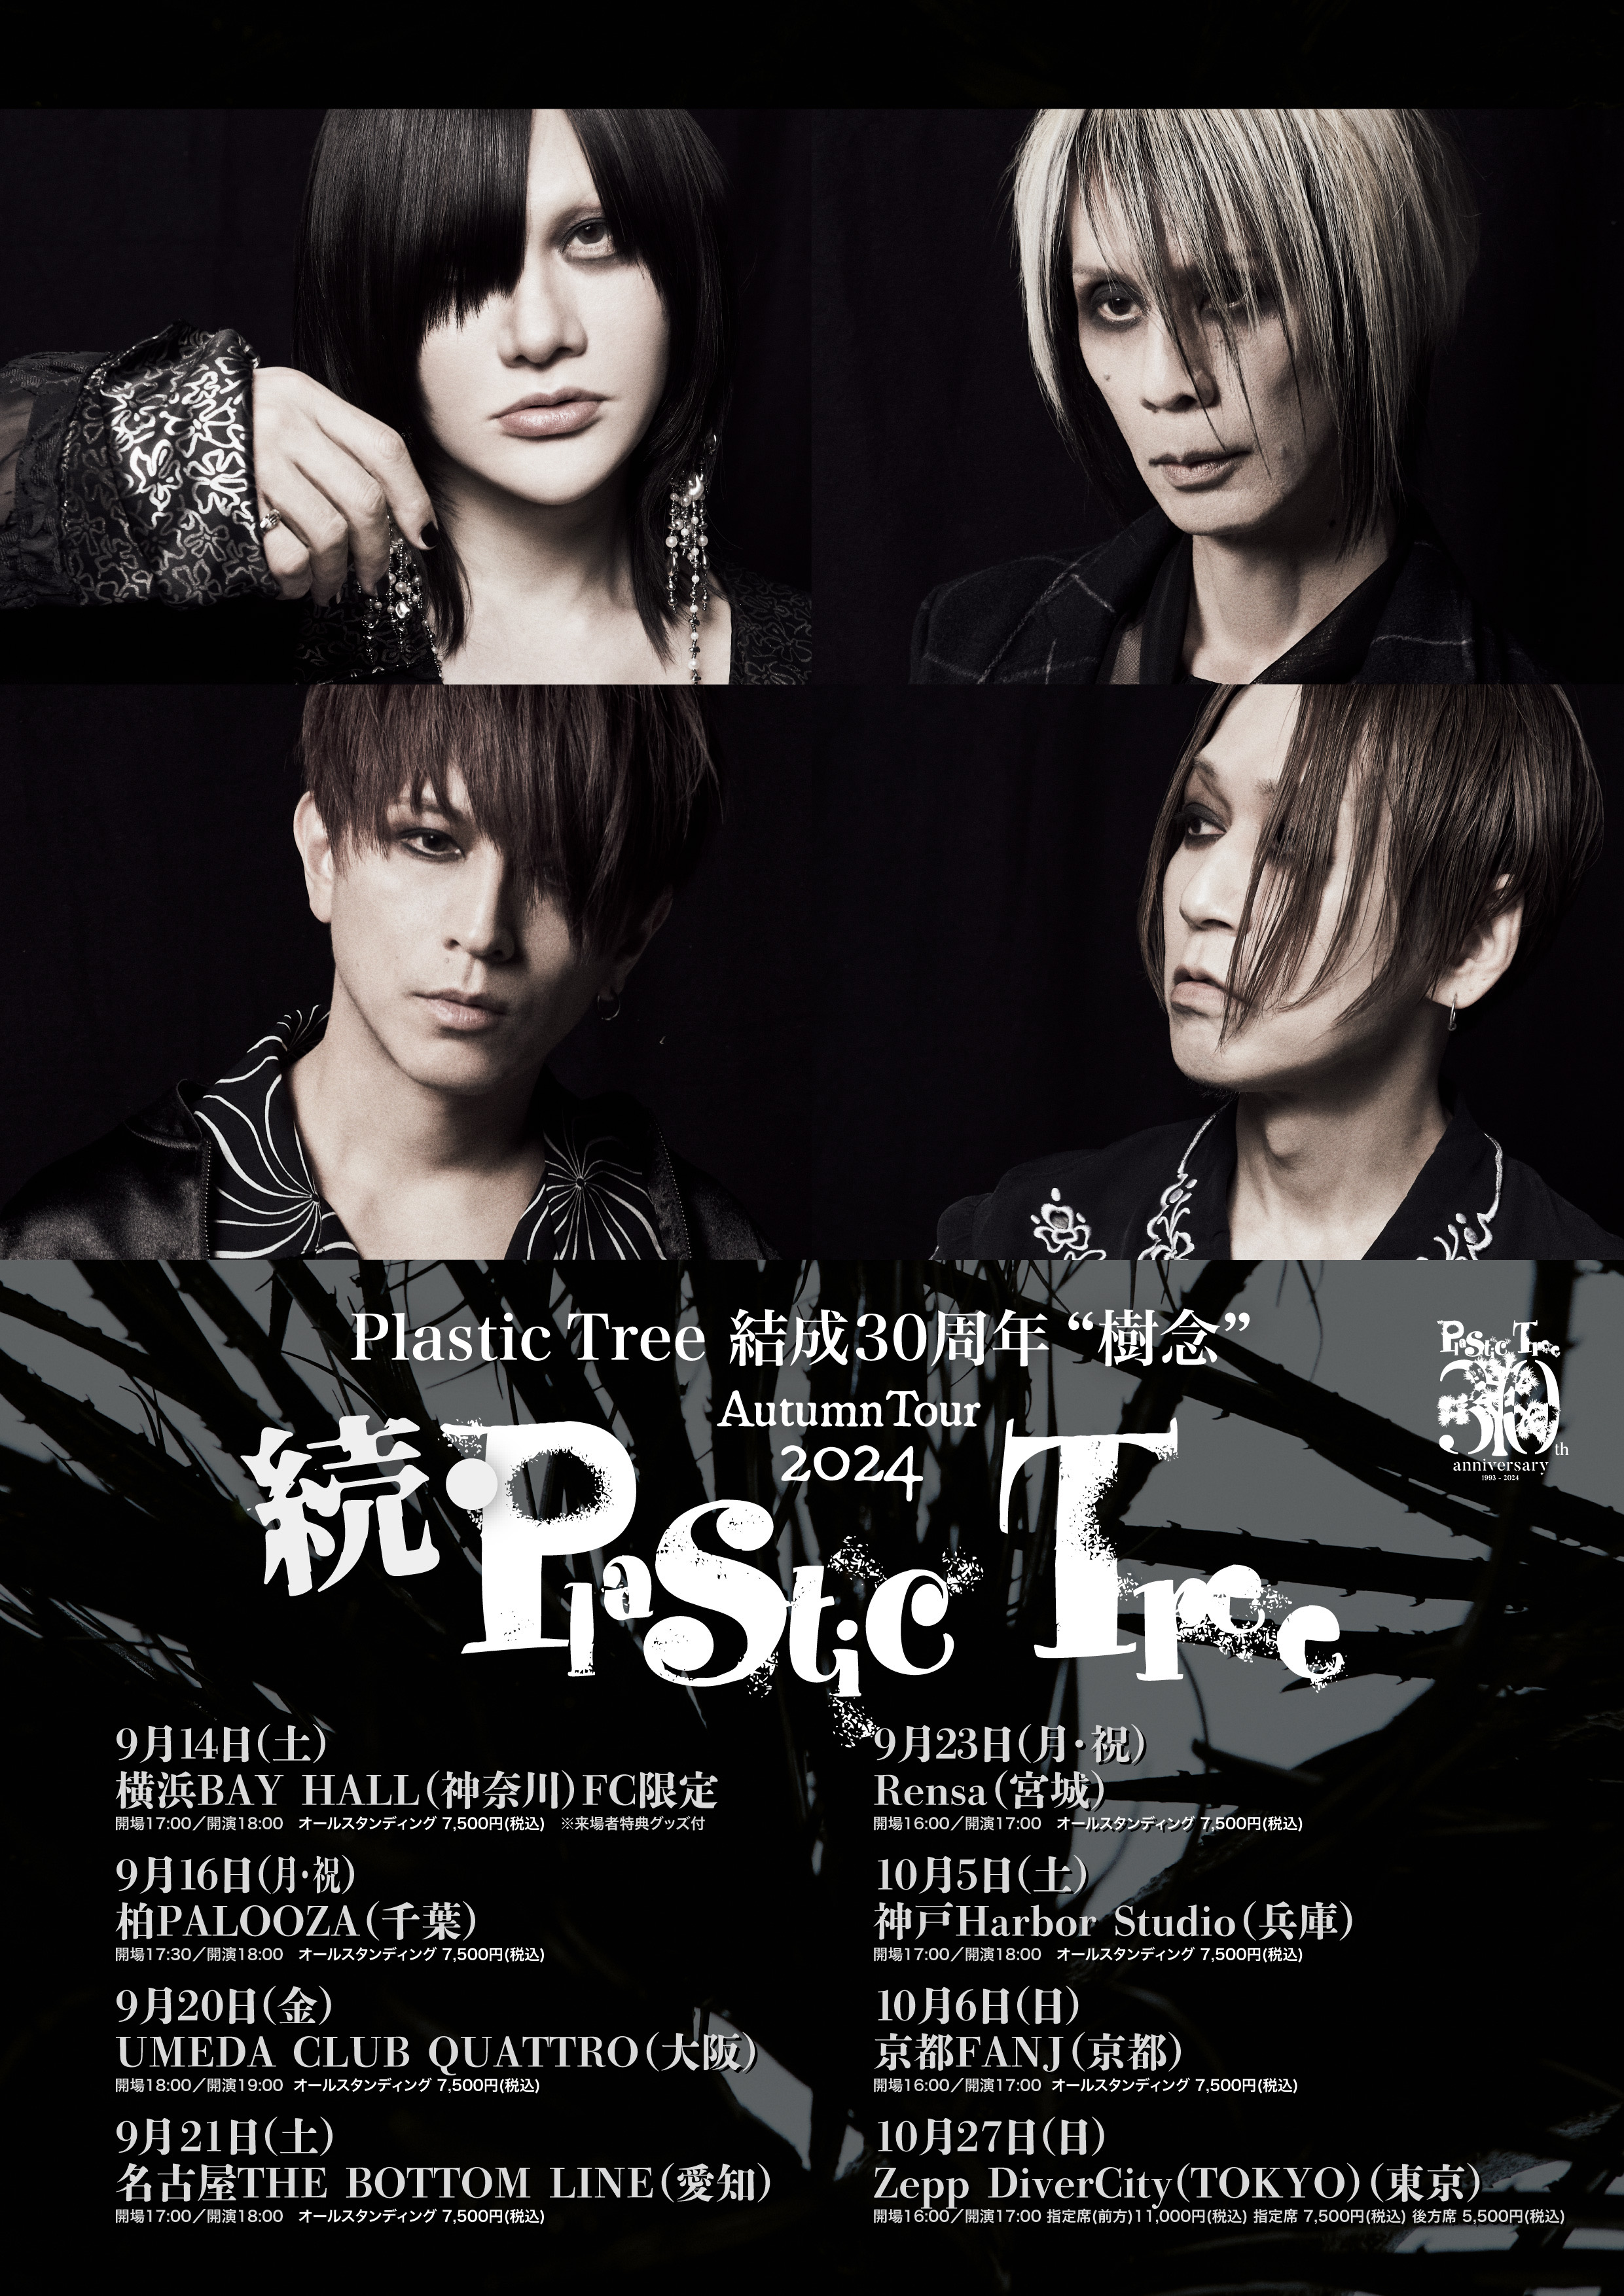 Plastic Tree 結成30周年“樹念”   Autumn Tour2024「続・Plastic Tree」